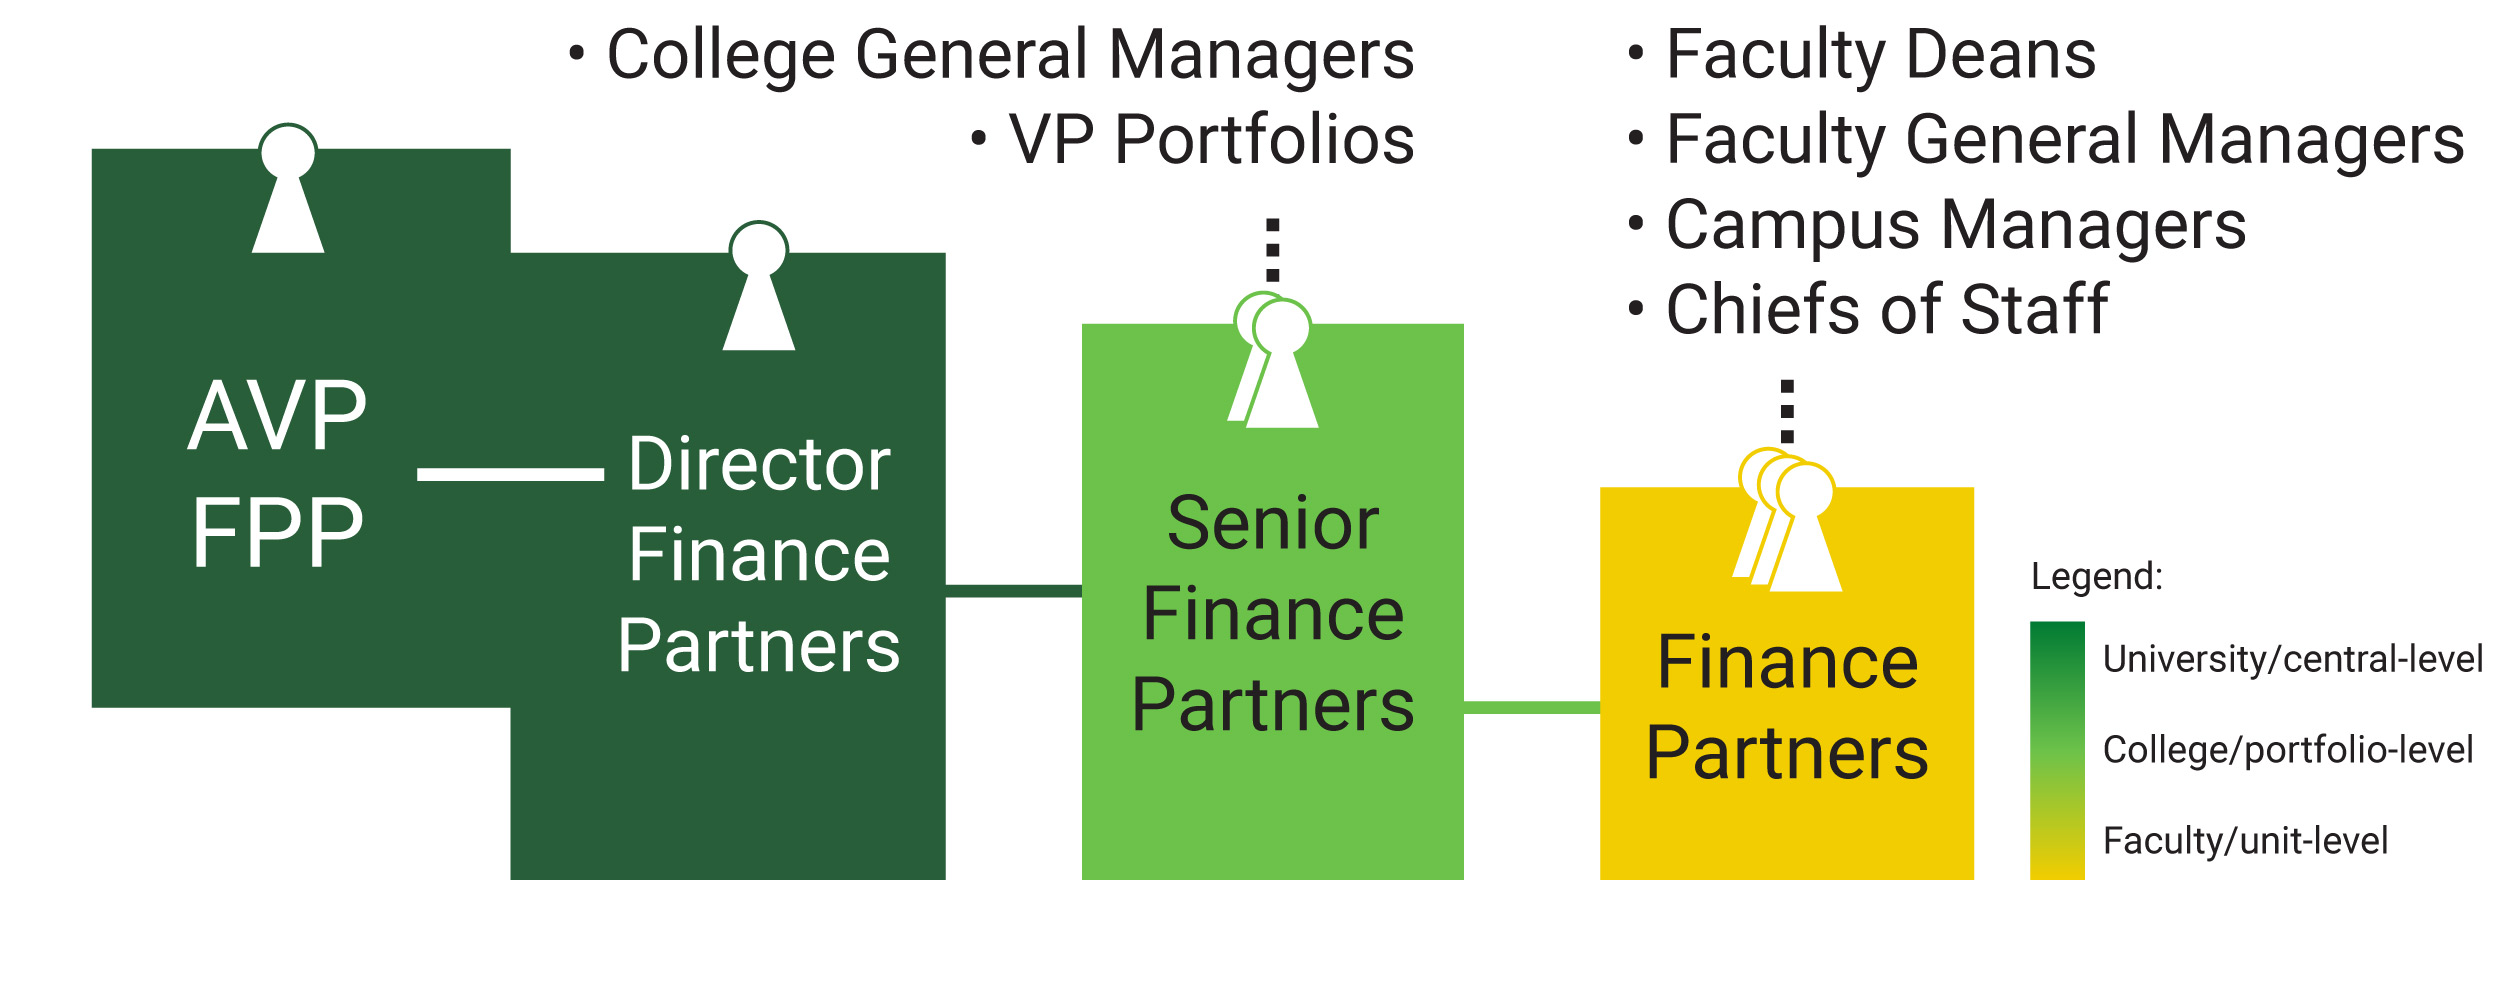 finance-partners-updated.jpg